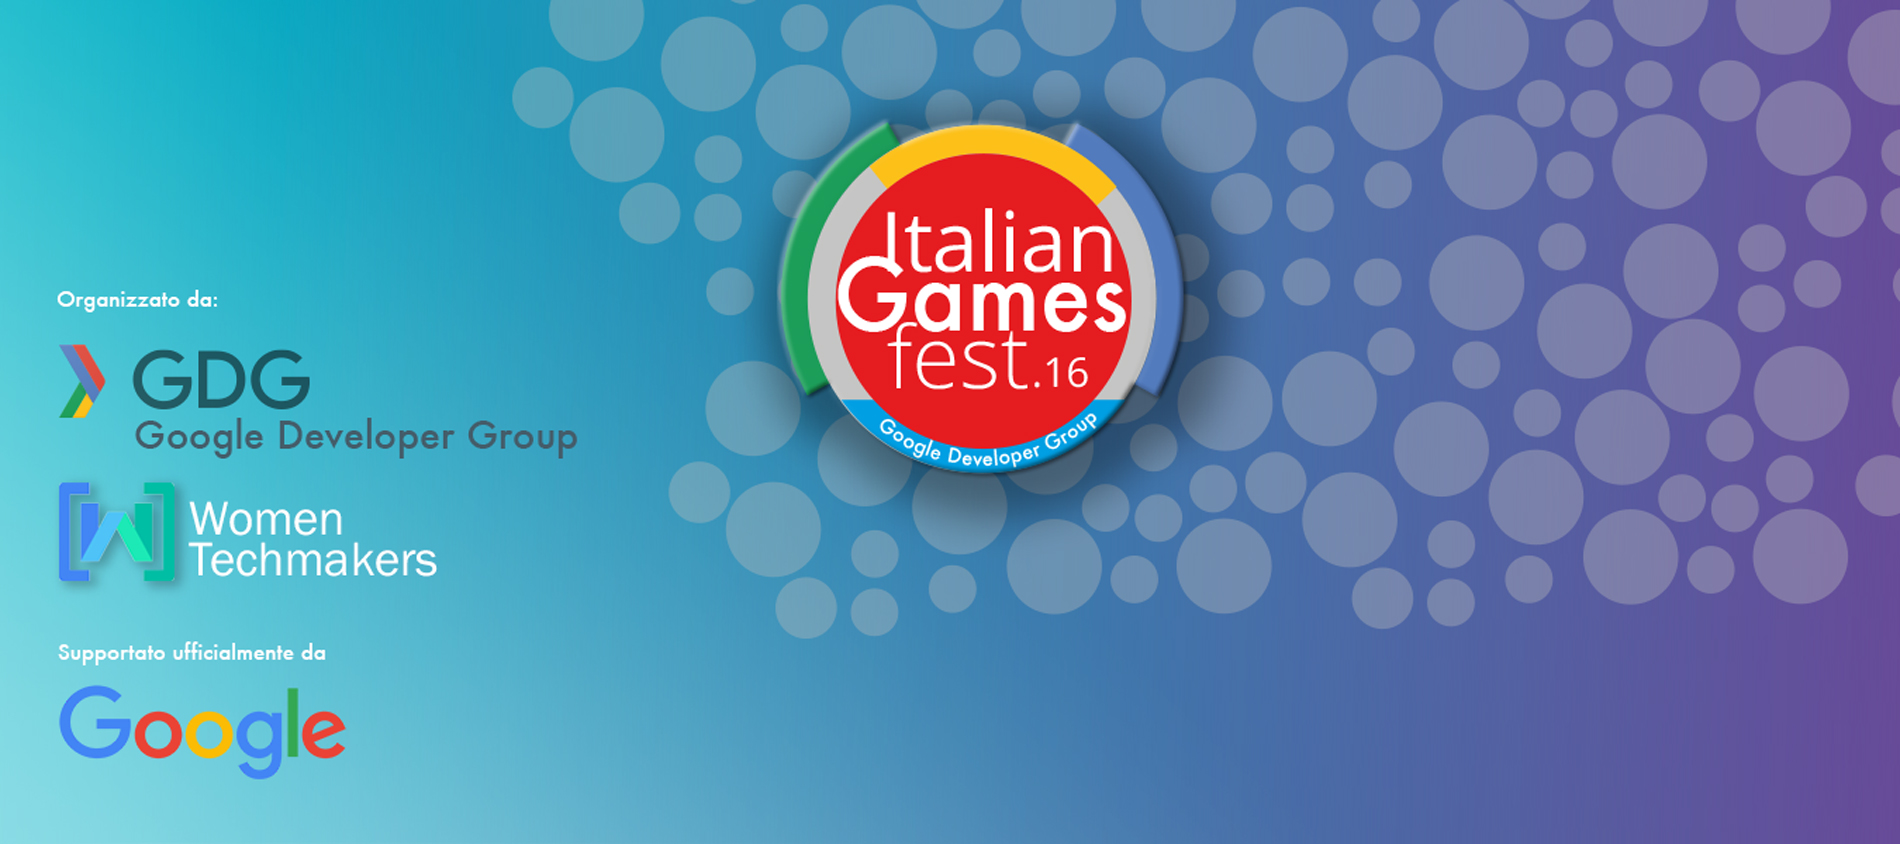 Italian Games Fest 2016 del GDG Nebrod